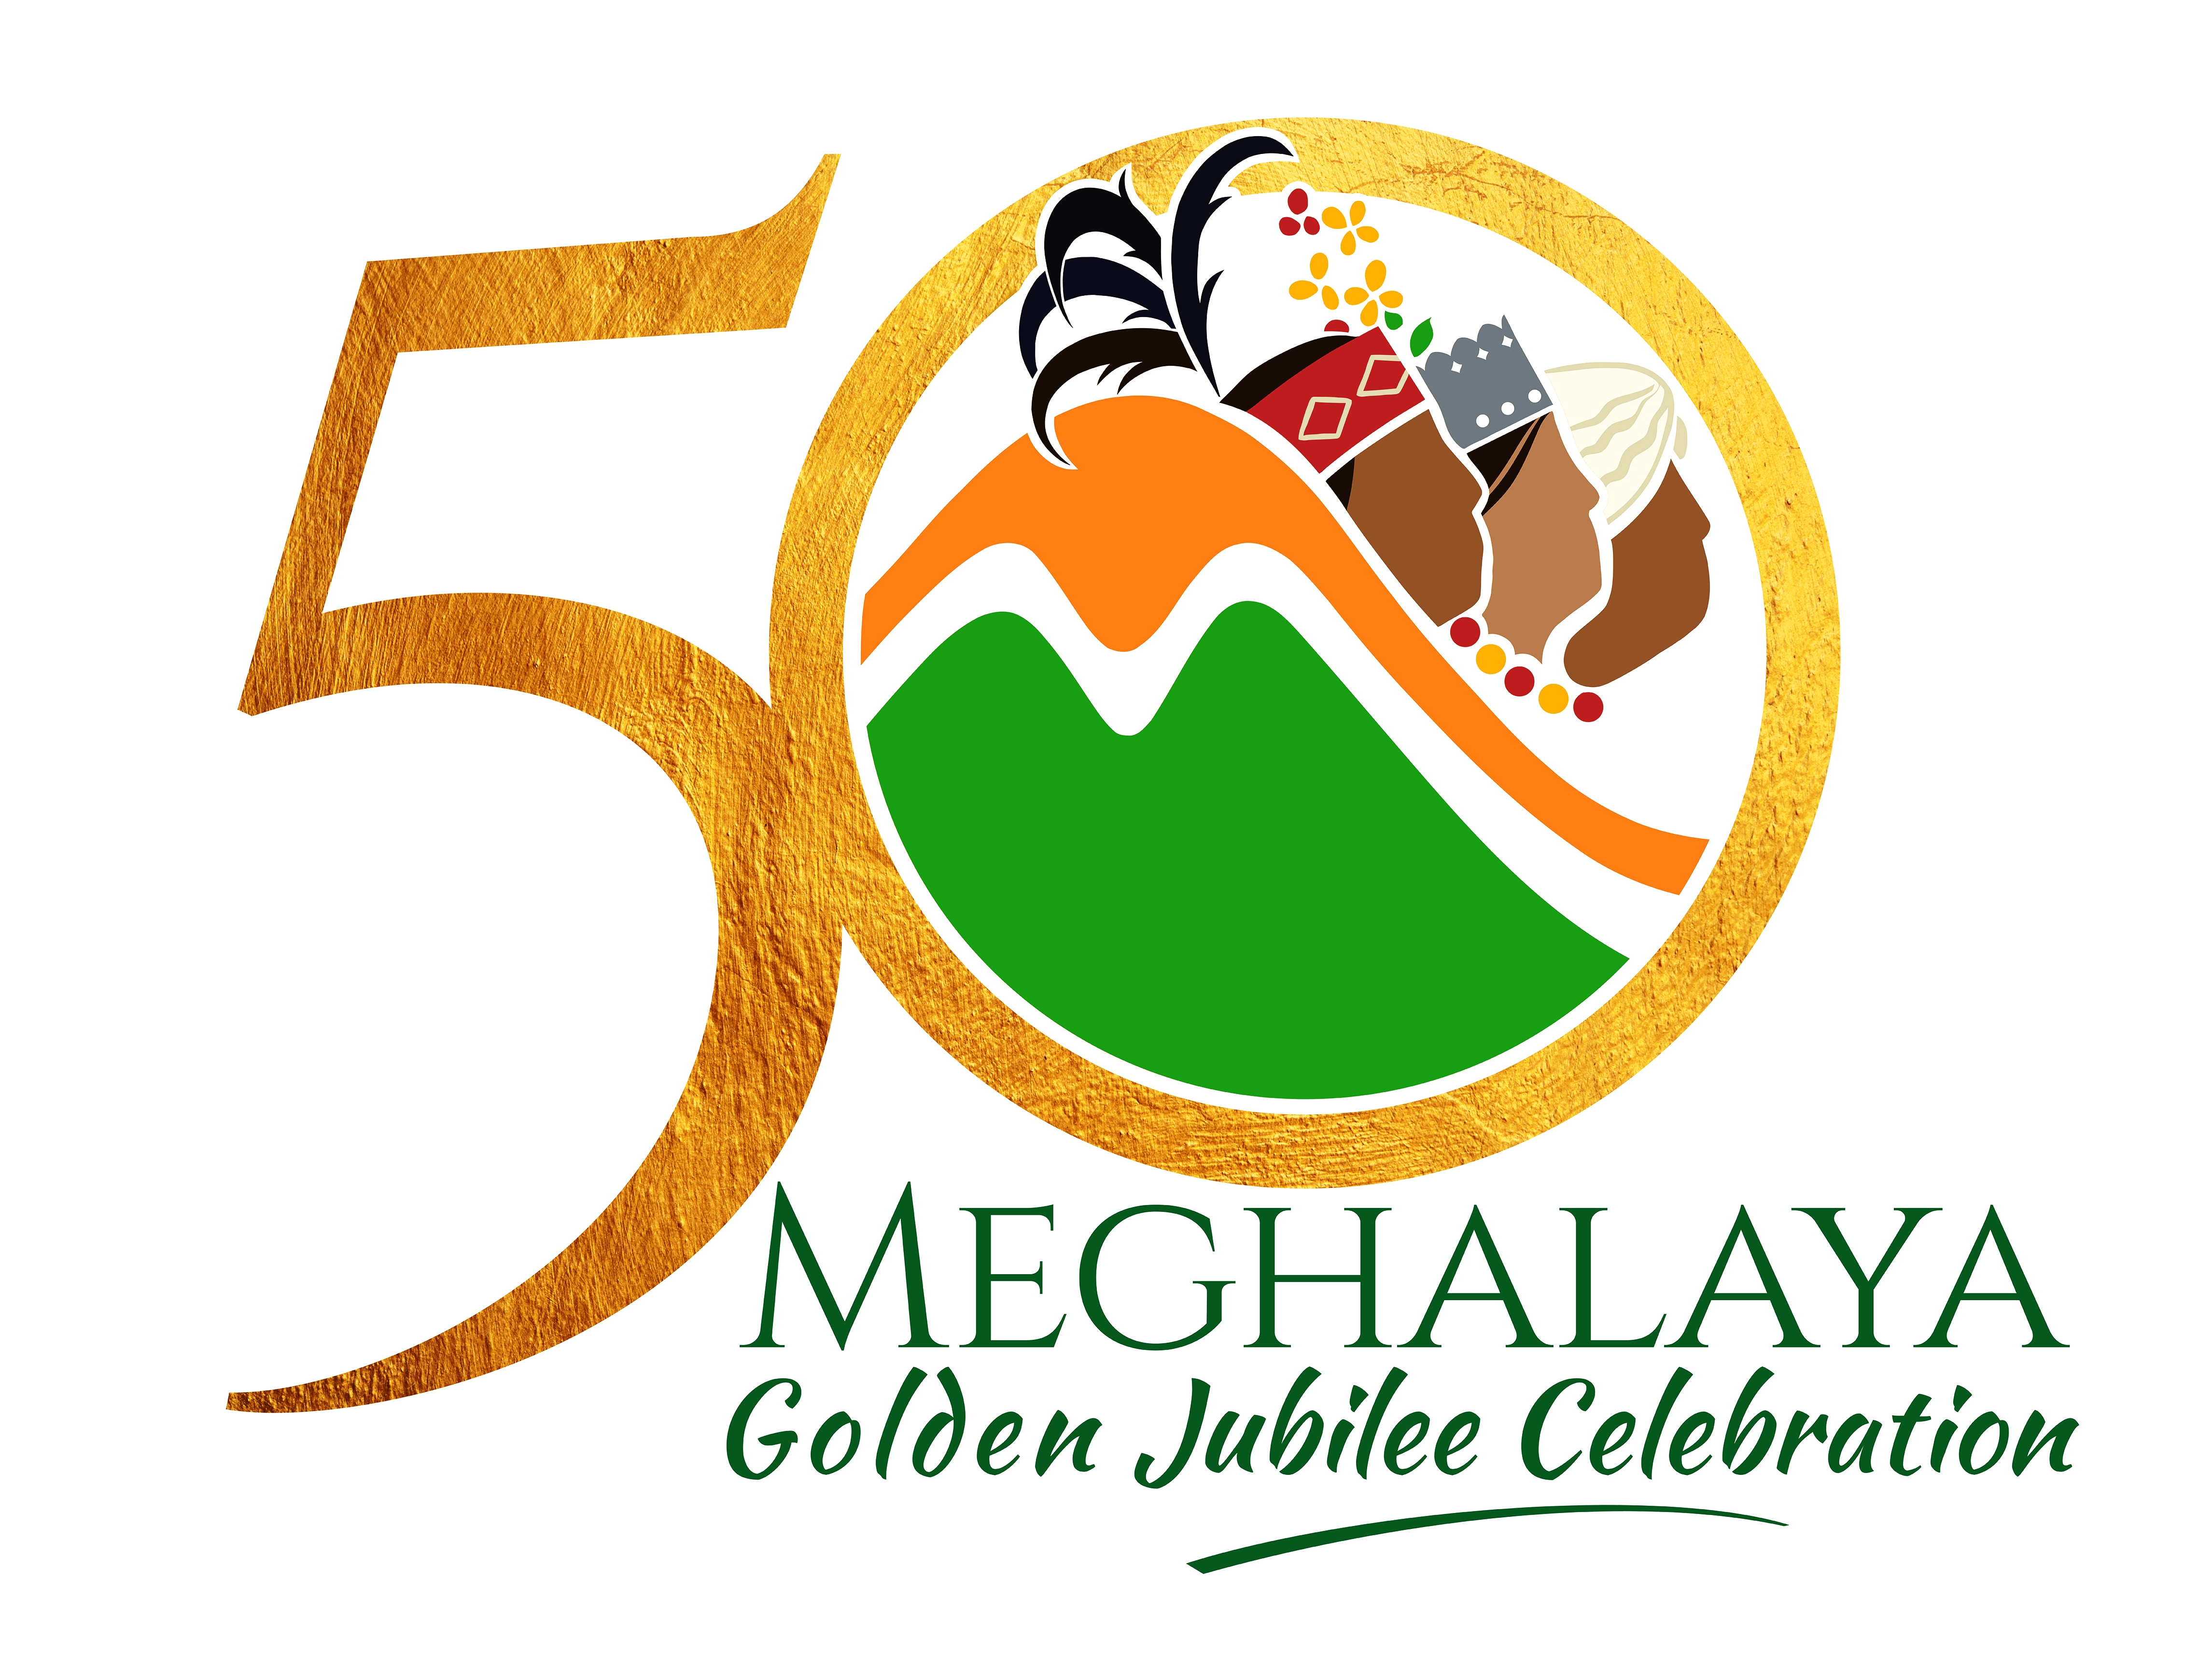 Golden Jubilee Celebration Meghalaya Logo